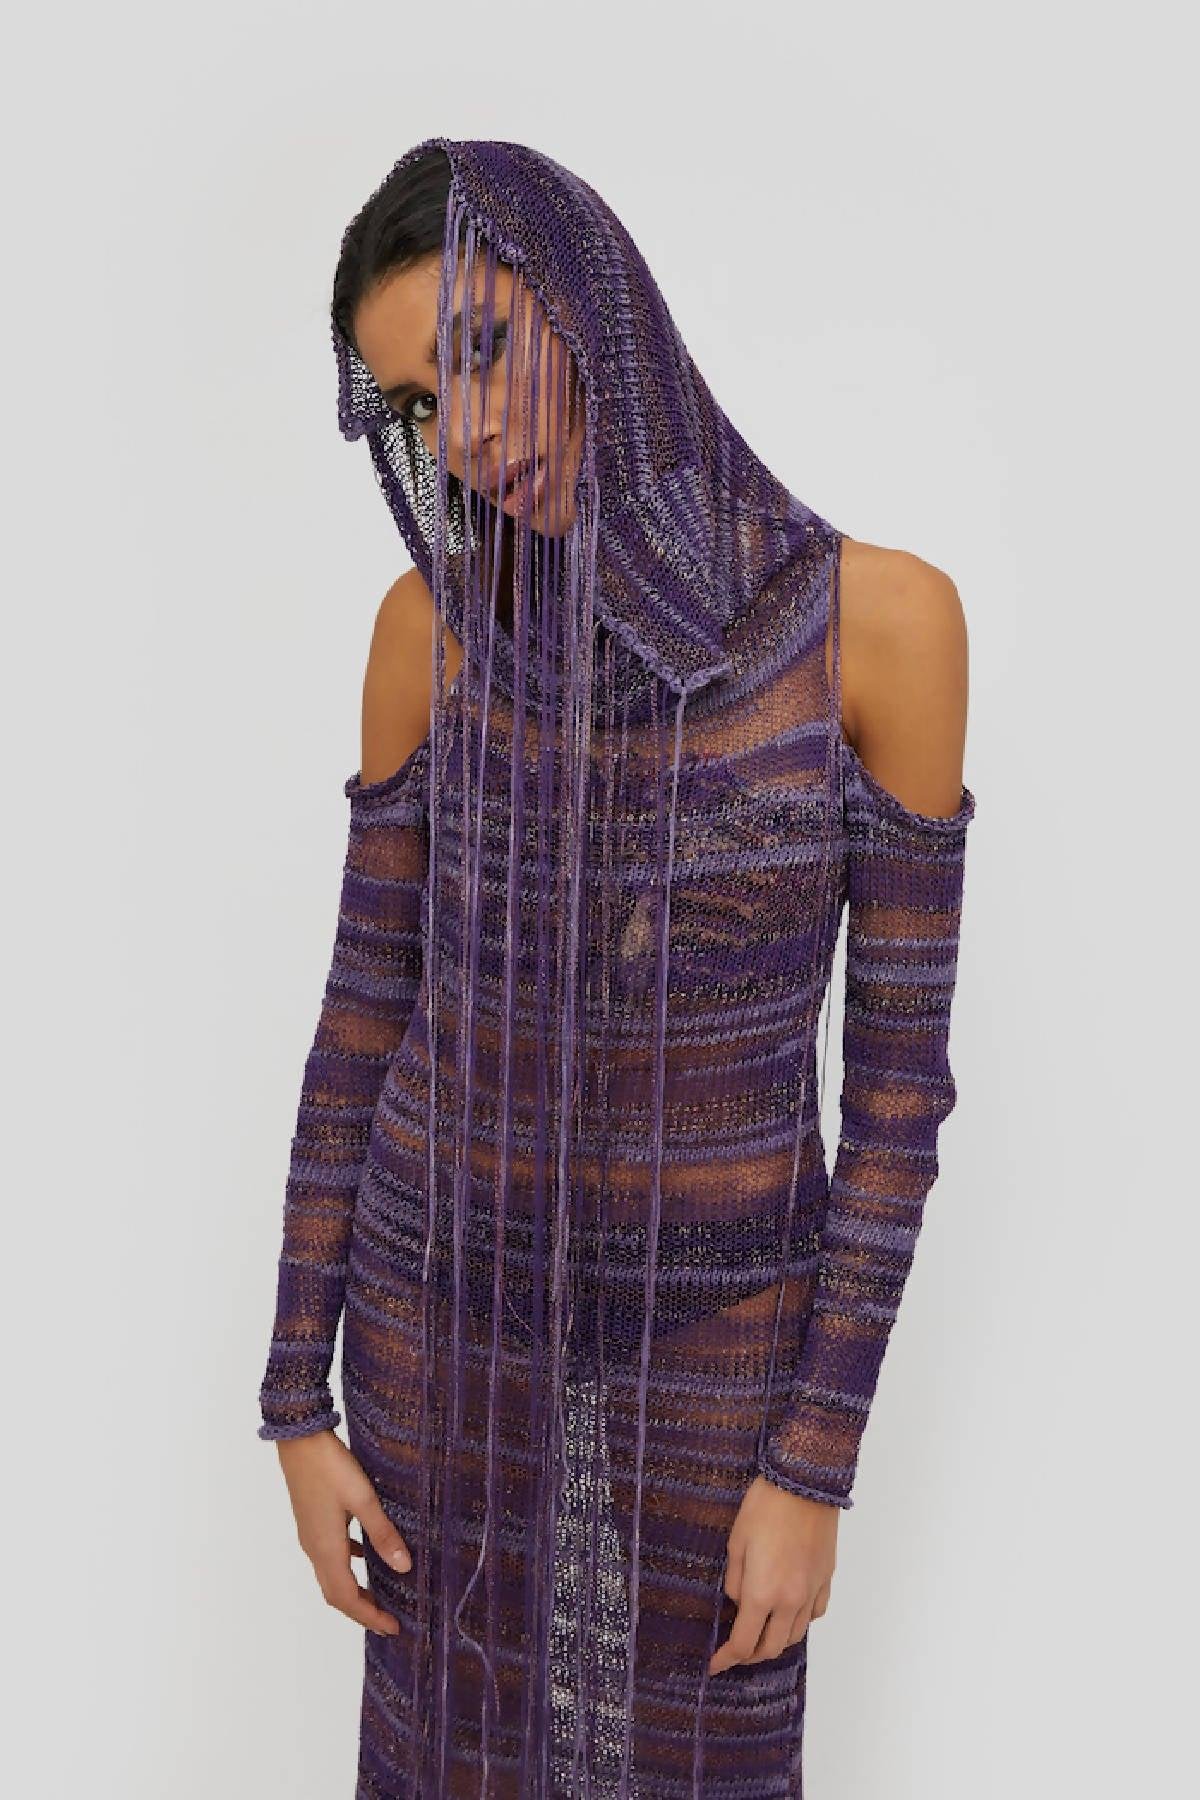 Purple Dream Dress by SARAH REGENSBURGER